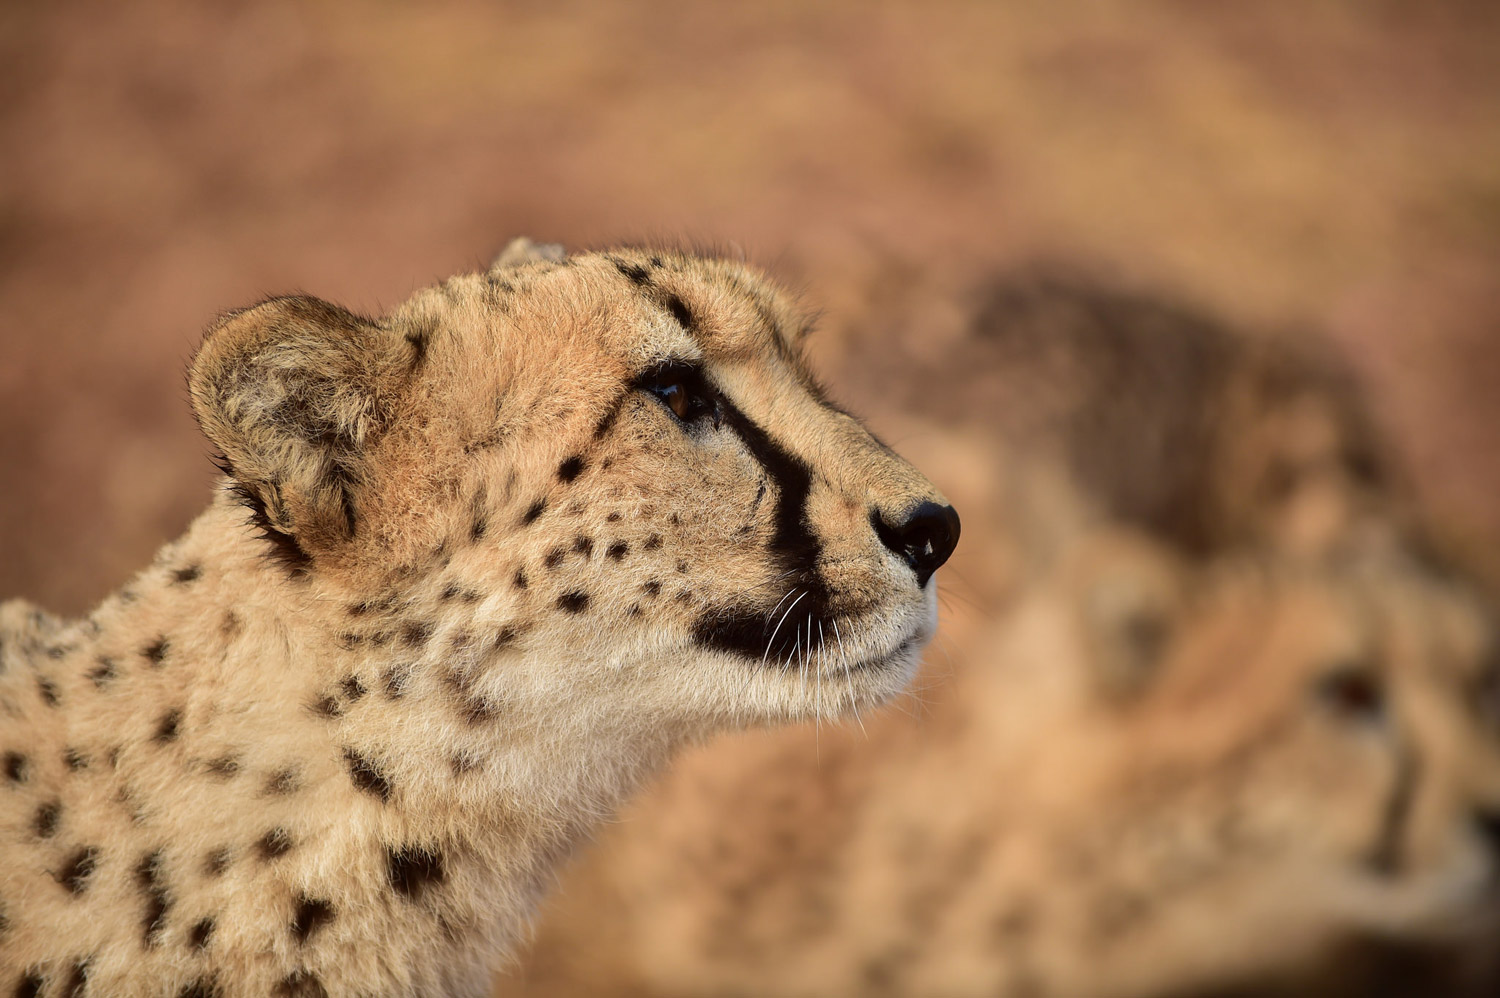 De Wildt Cheetah and Wildlife Centre